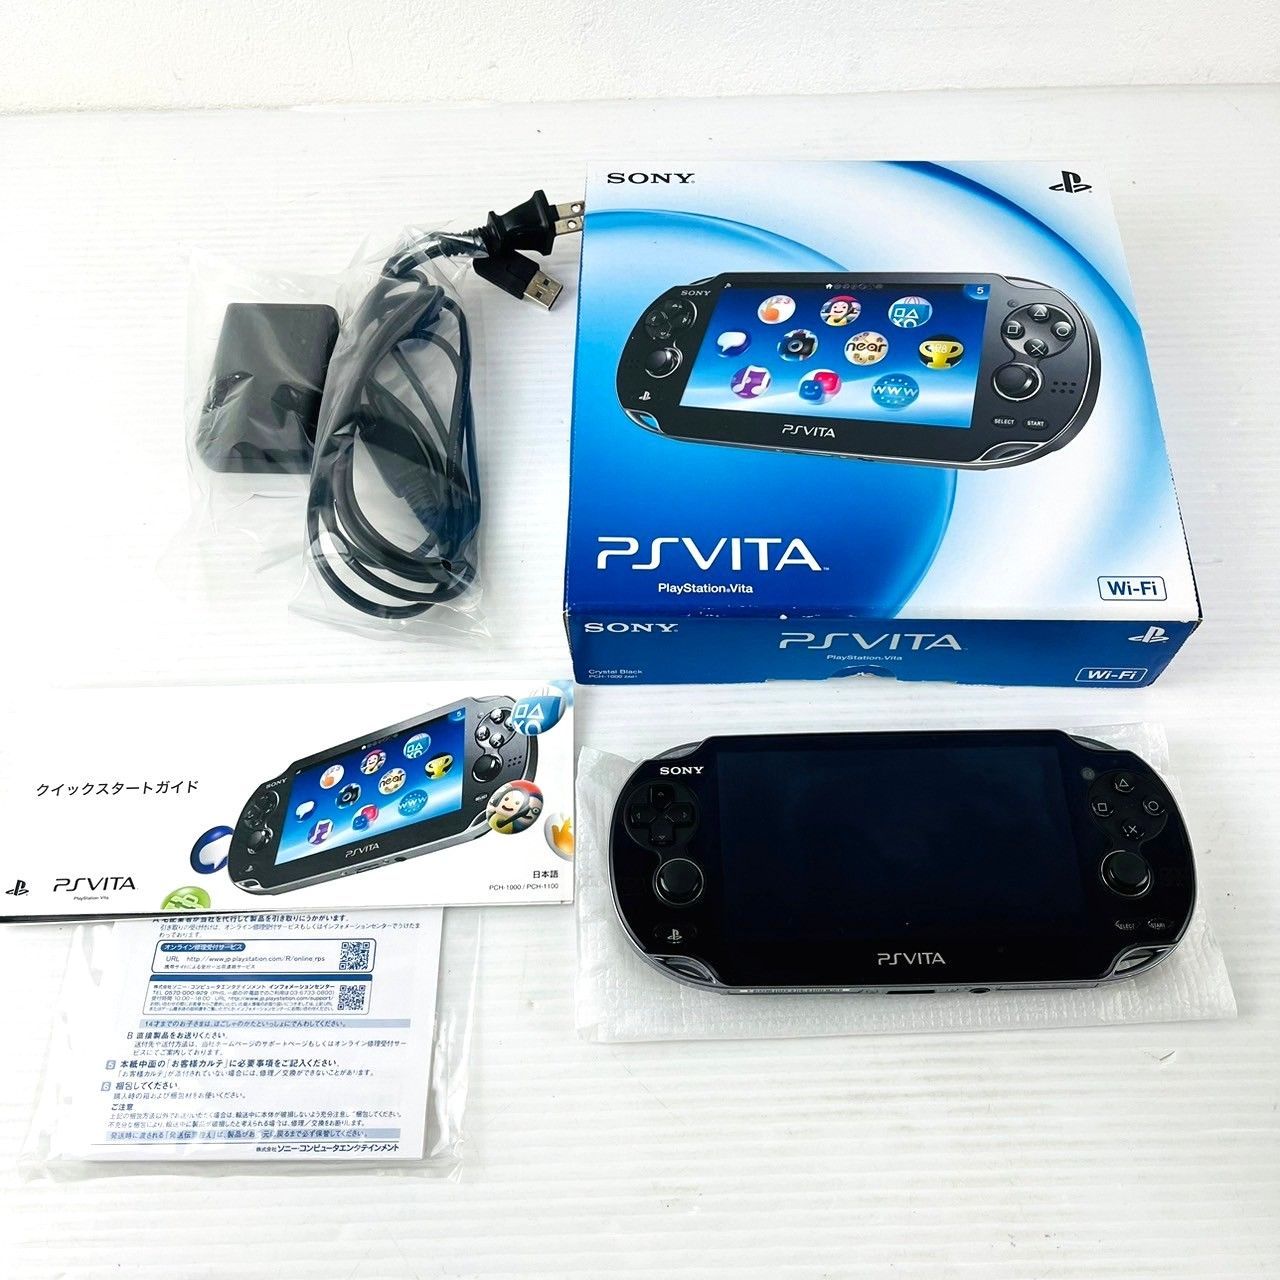 PSvita 1000 ブラック本体セット 動作品PSVita - 携帯用ゲーム機本体